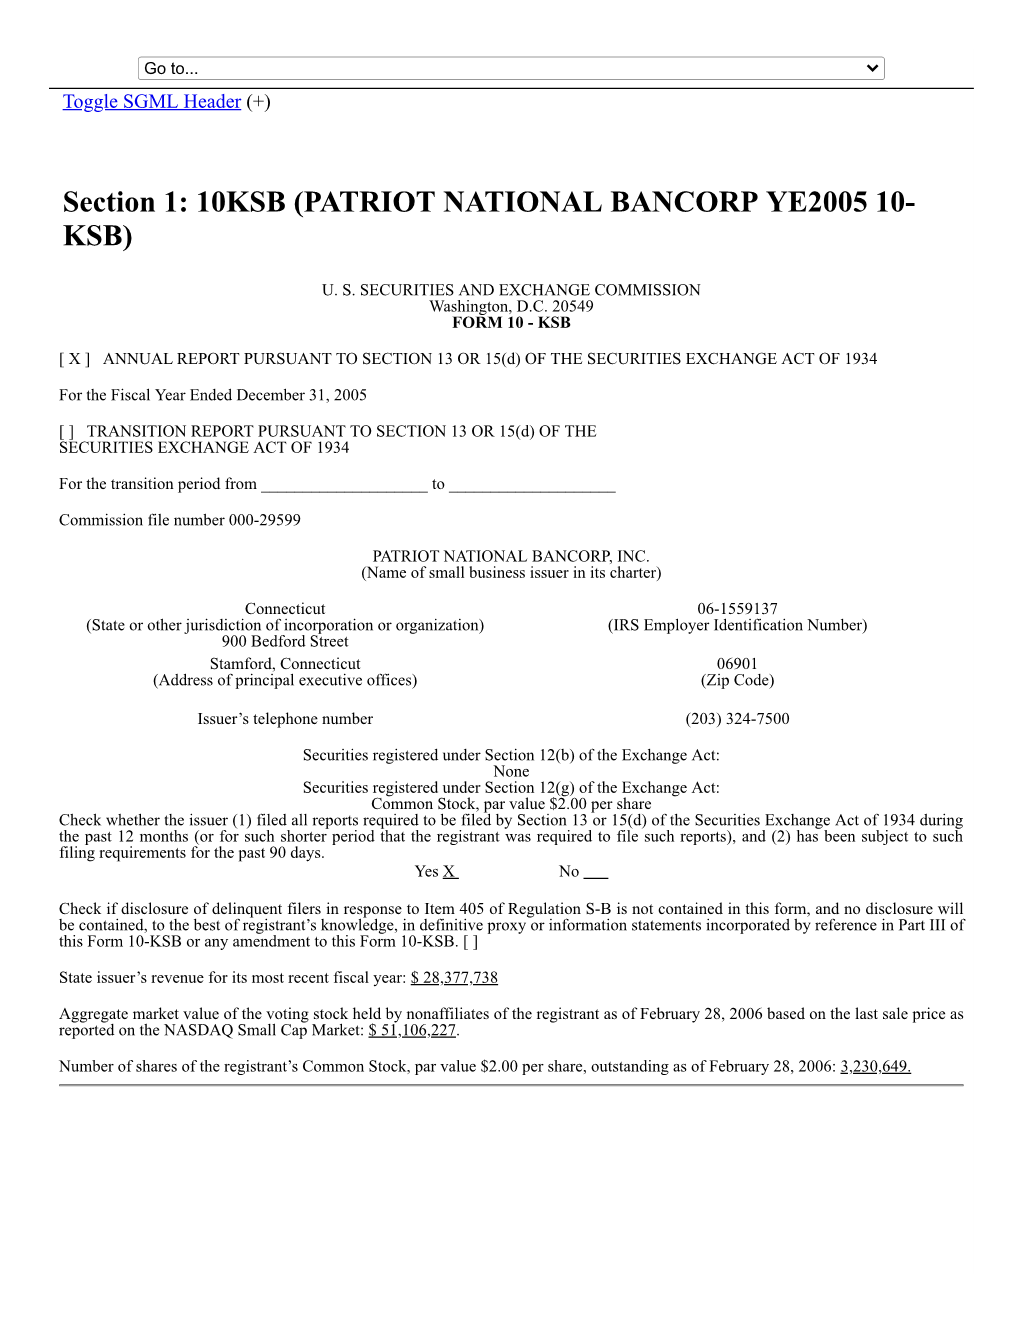 Section 1: 10KSB (PATRIOT NATIONAL BANCORP YE2005 10- KSB)